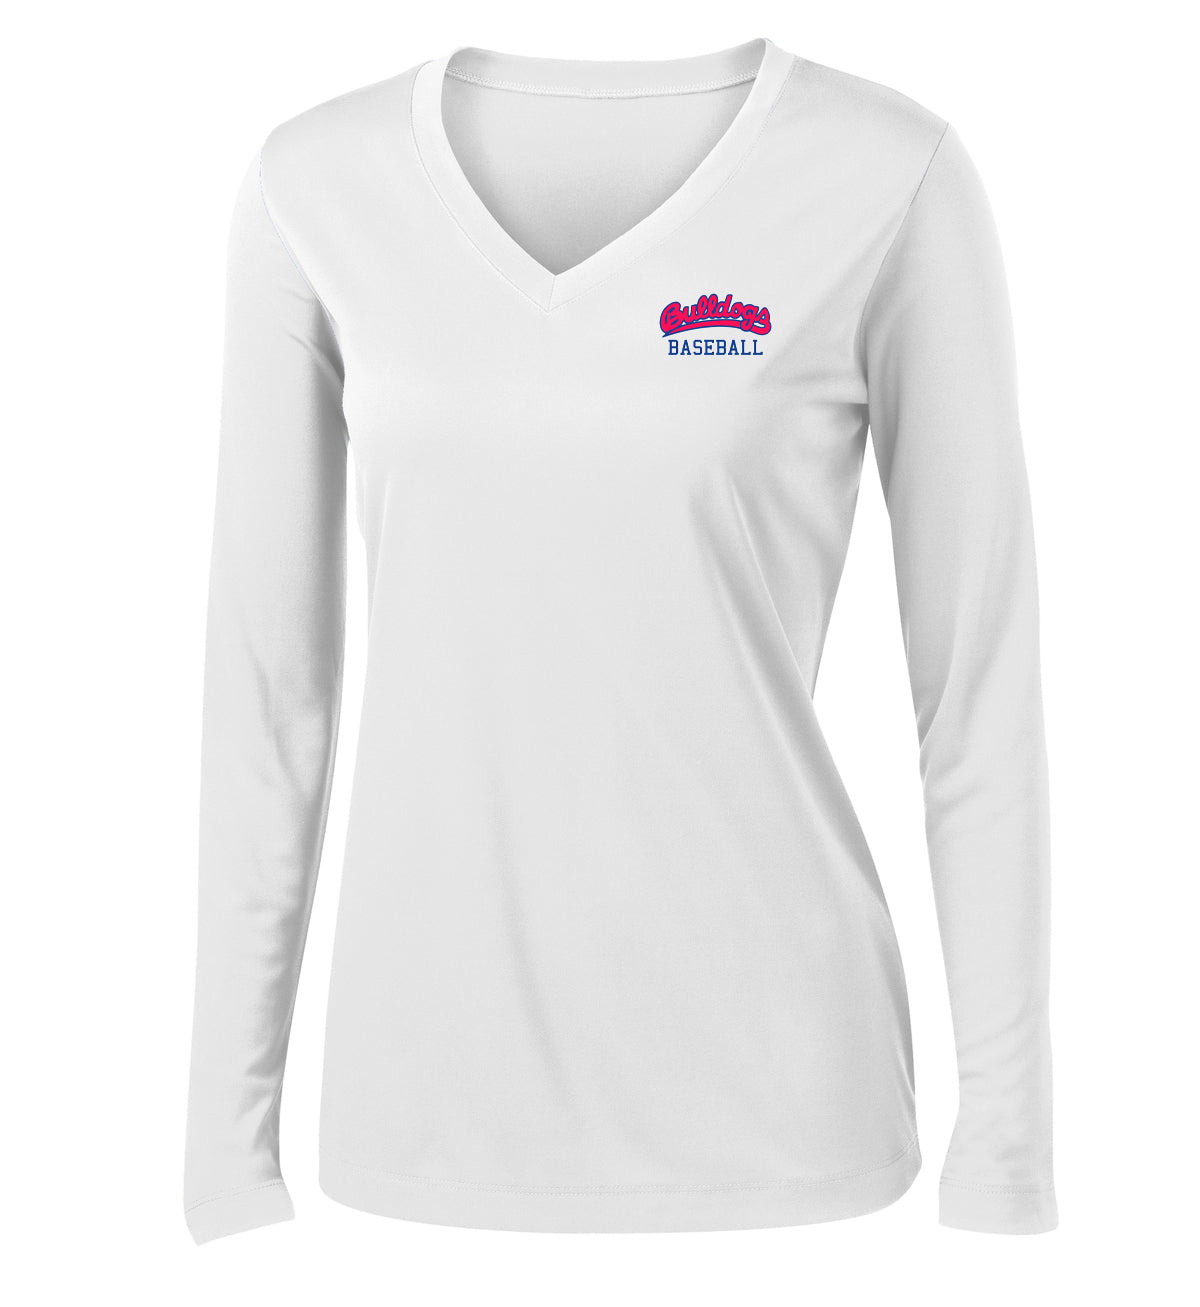 Michigan Bulldogs Baseball Women's Long Sleeve Performance Shirt